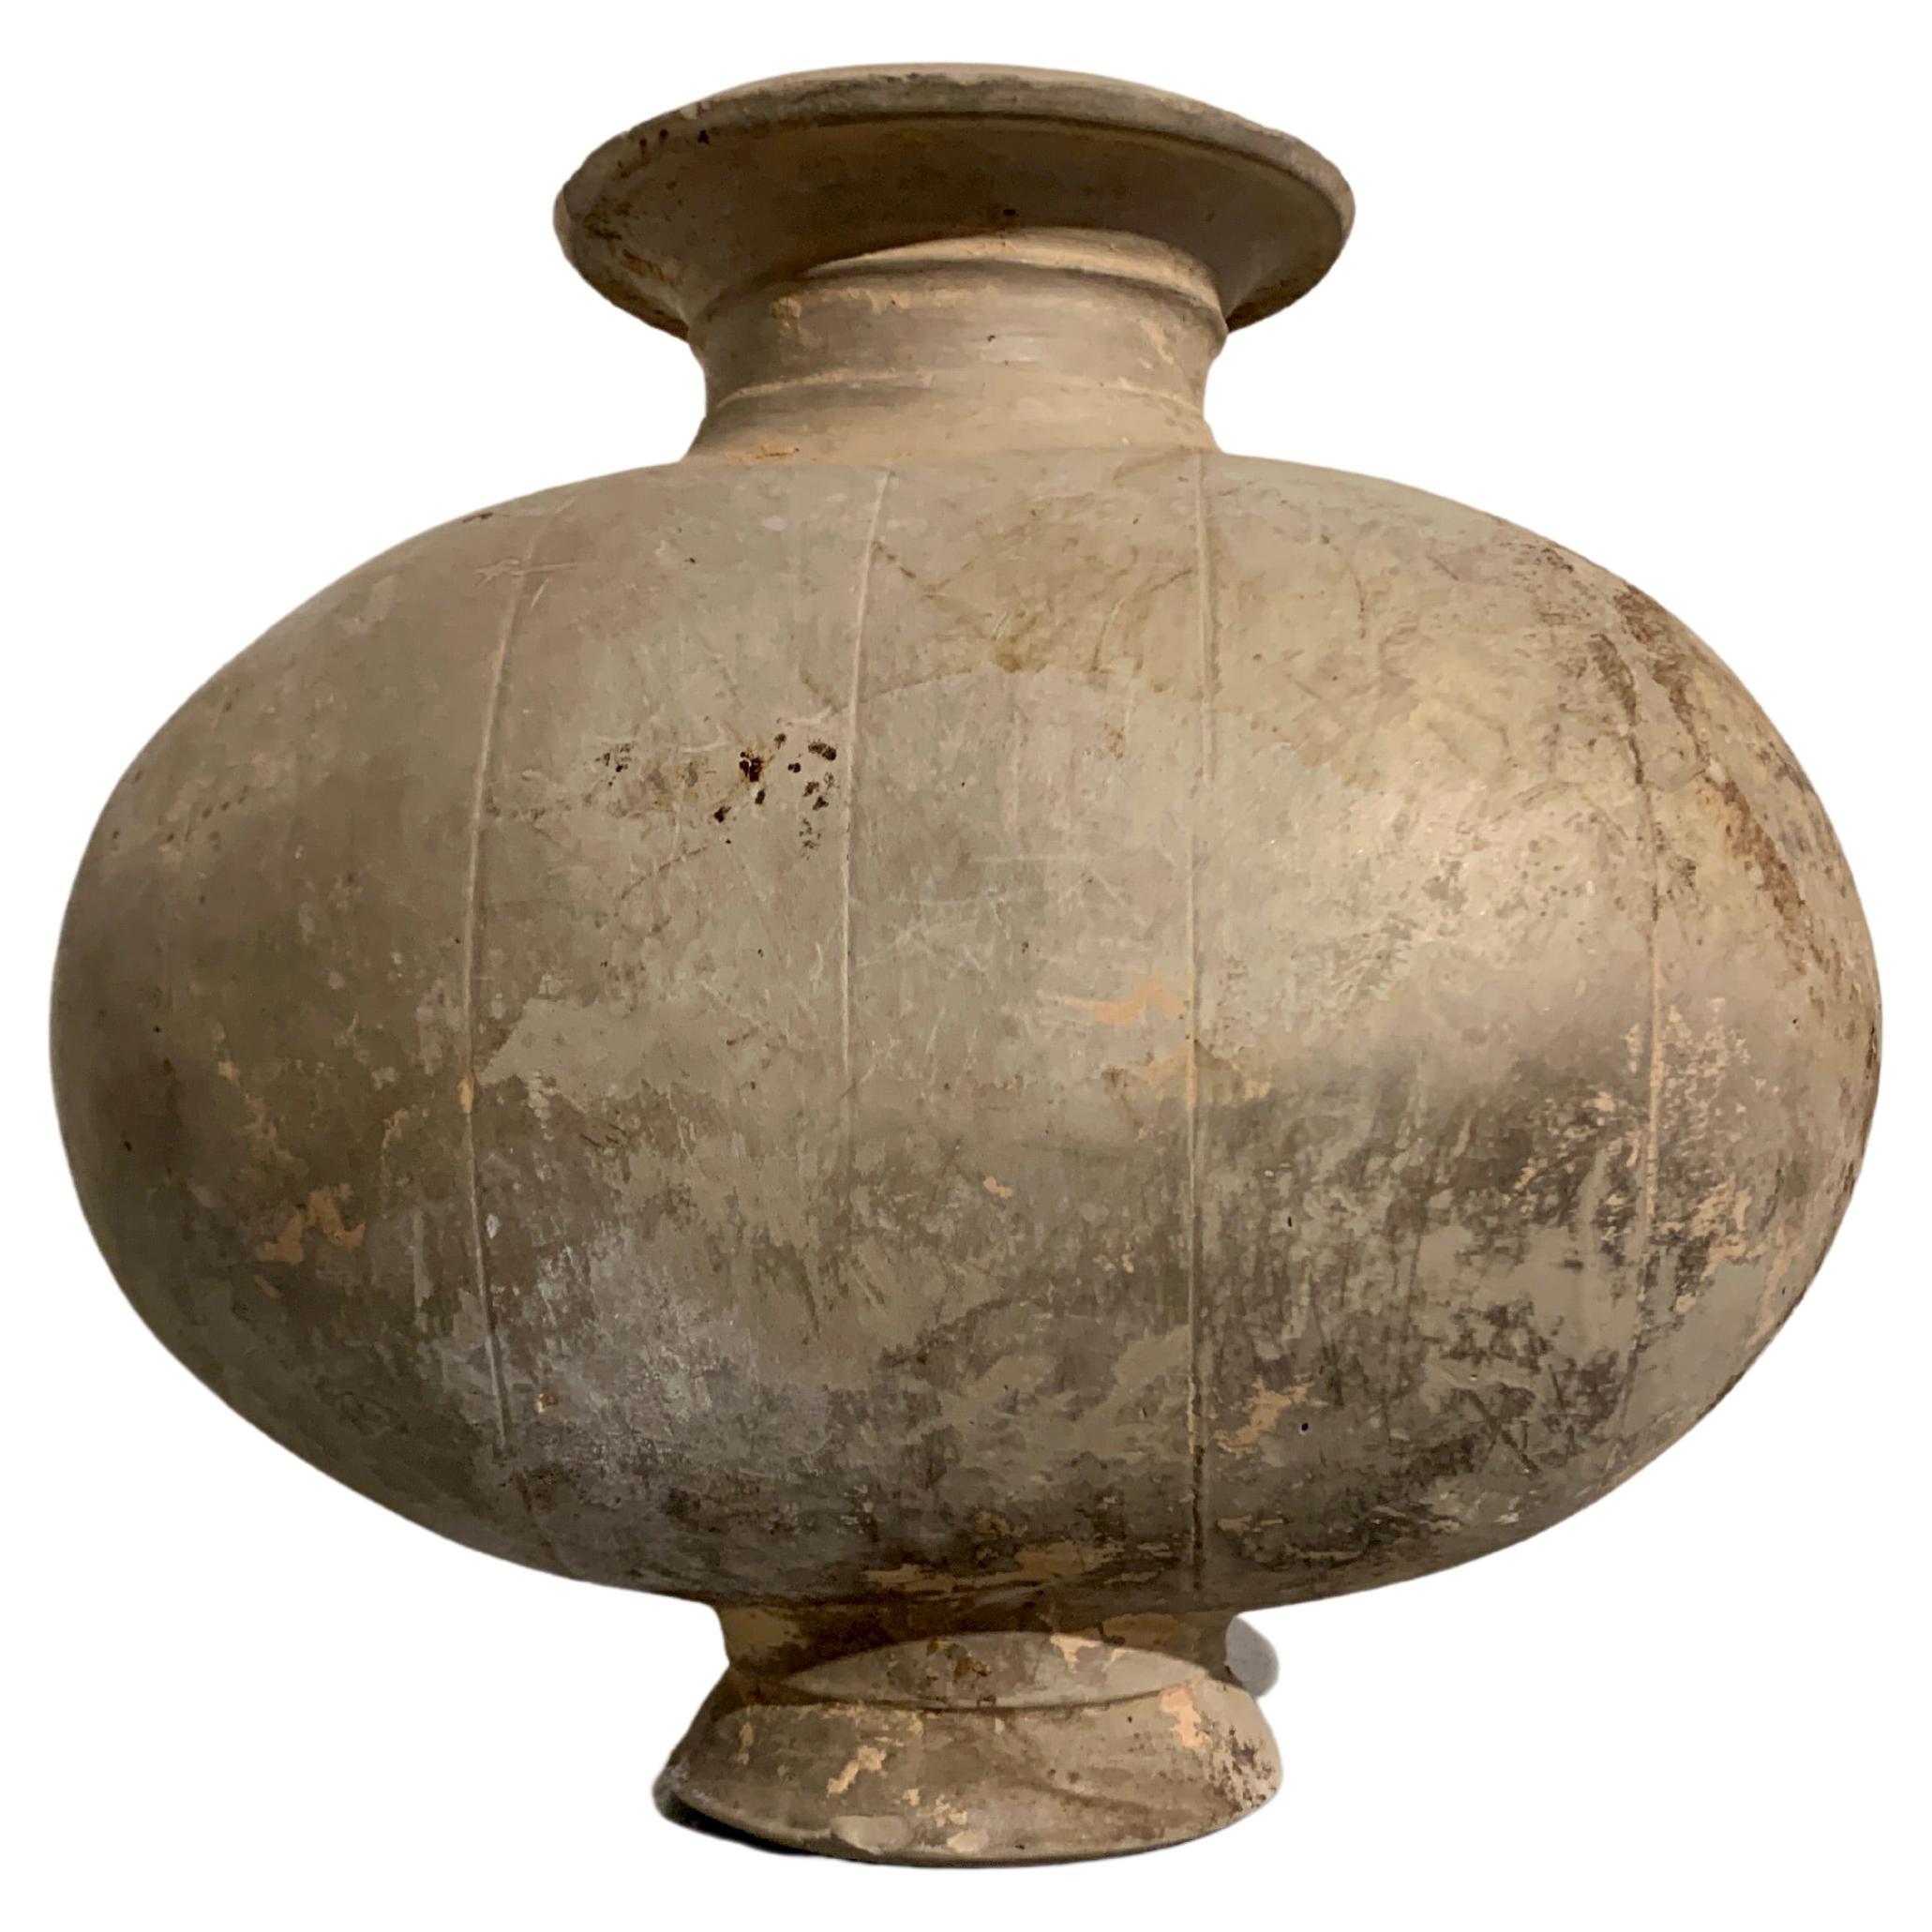 Chinesisches Kokongefäß, grau brünierte Keramik, Western Han-Dynastie, China